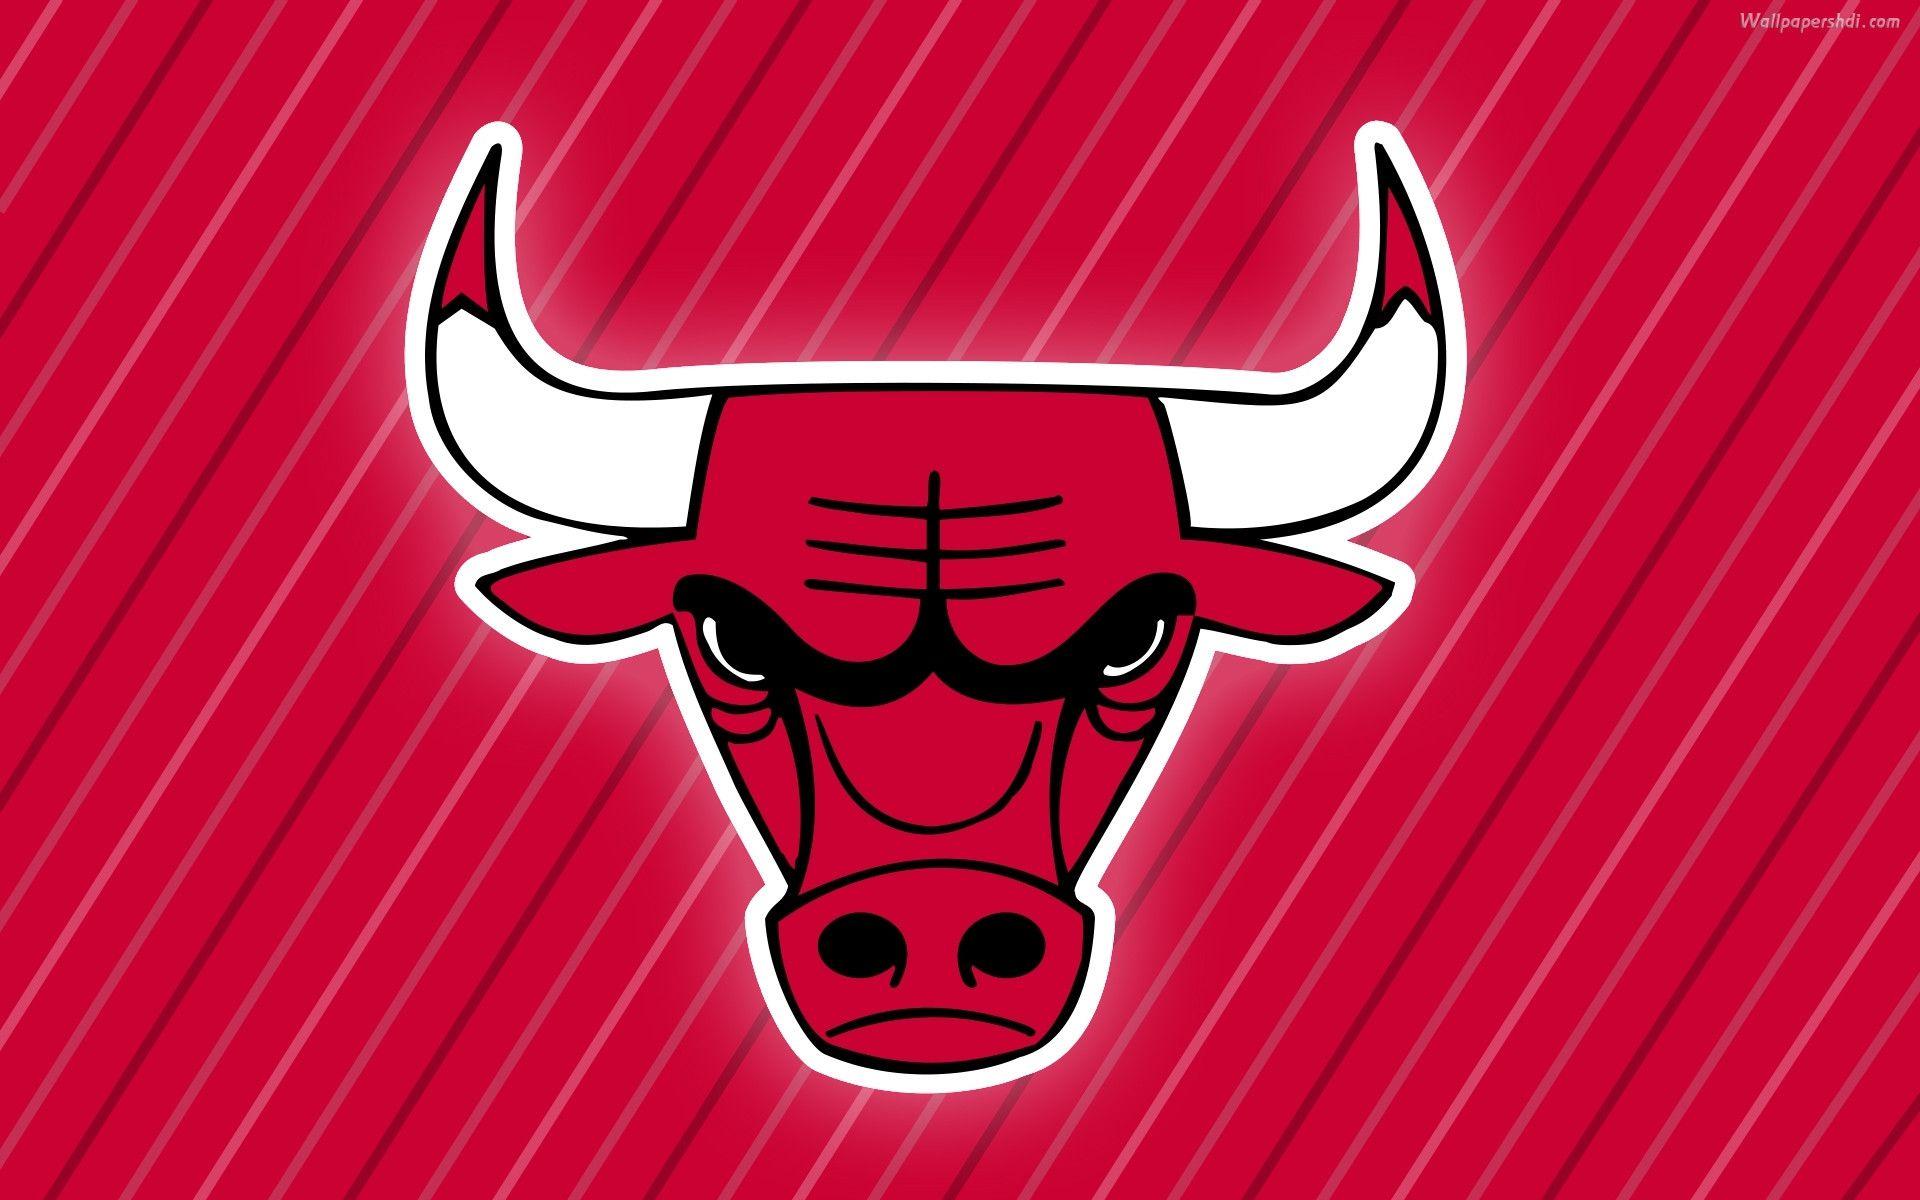 Chicago Bulls iPhone 5 wallpaper